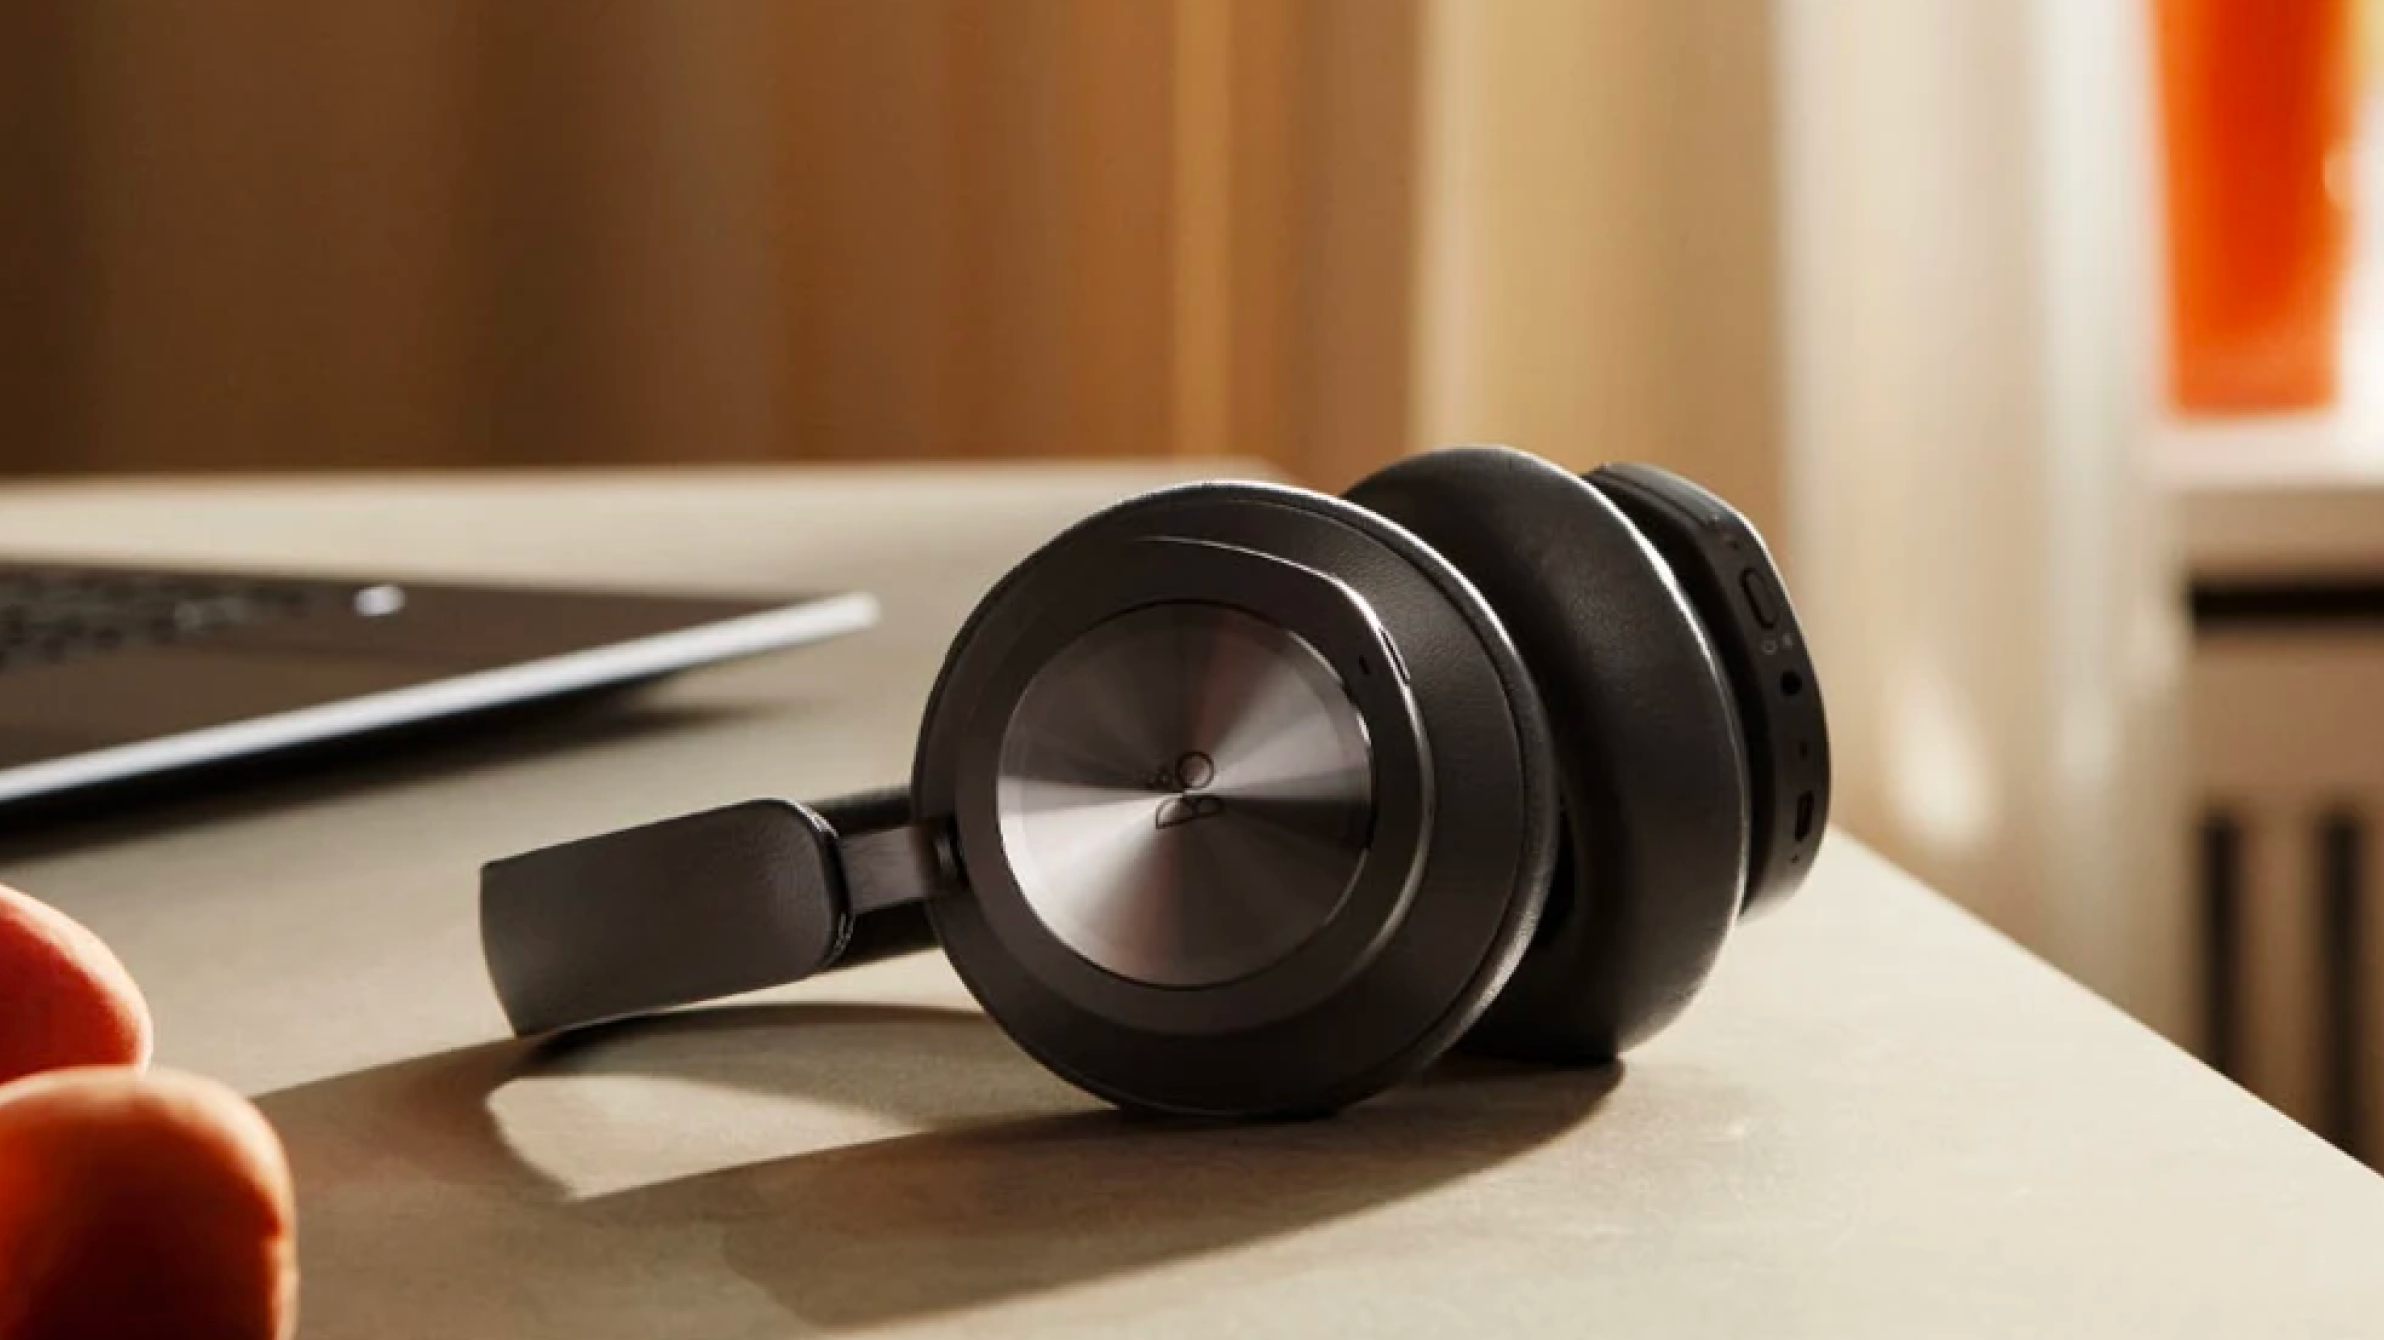 Bang & Olufsen headphones on a desk.